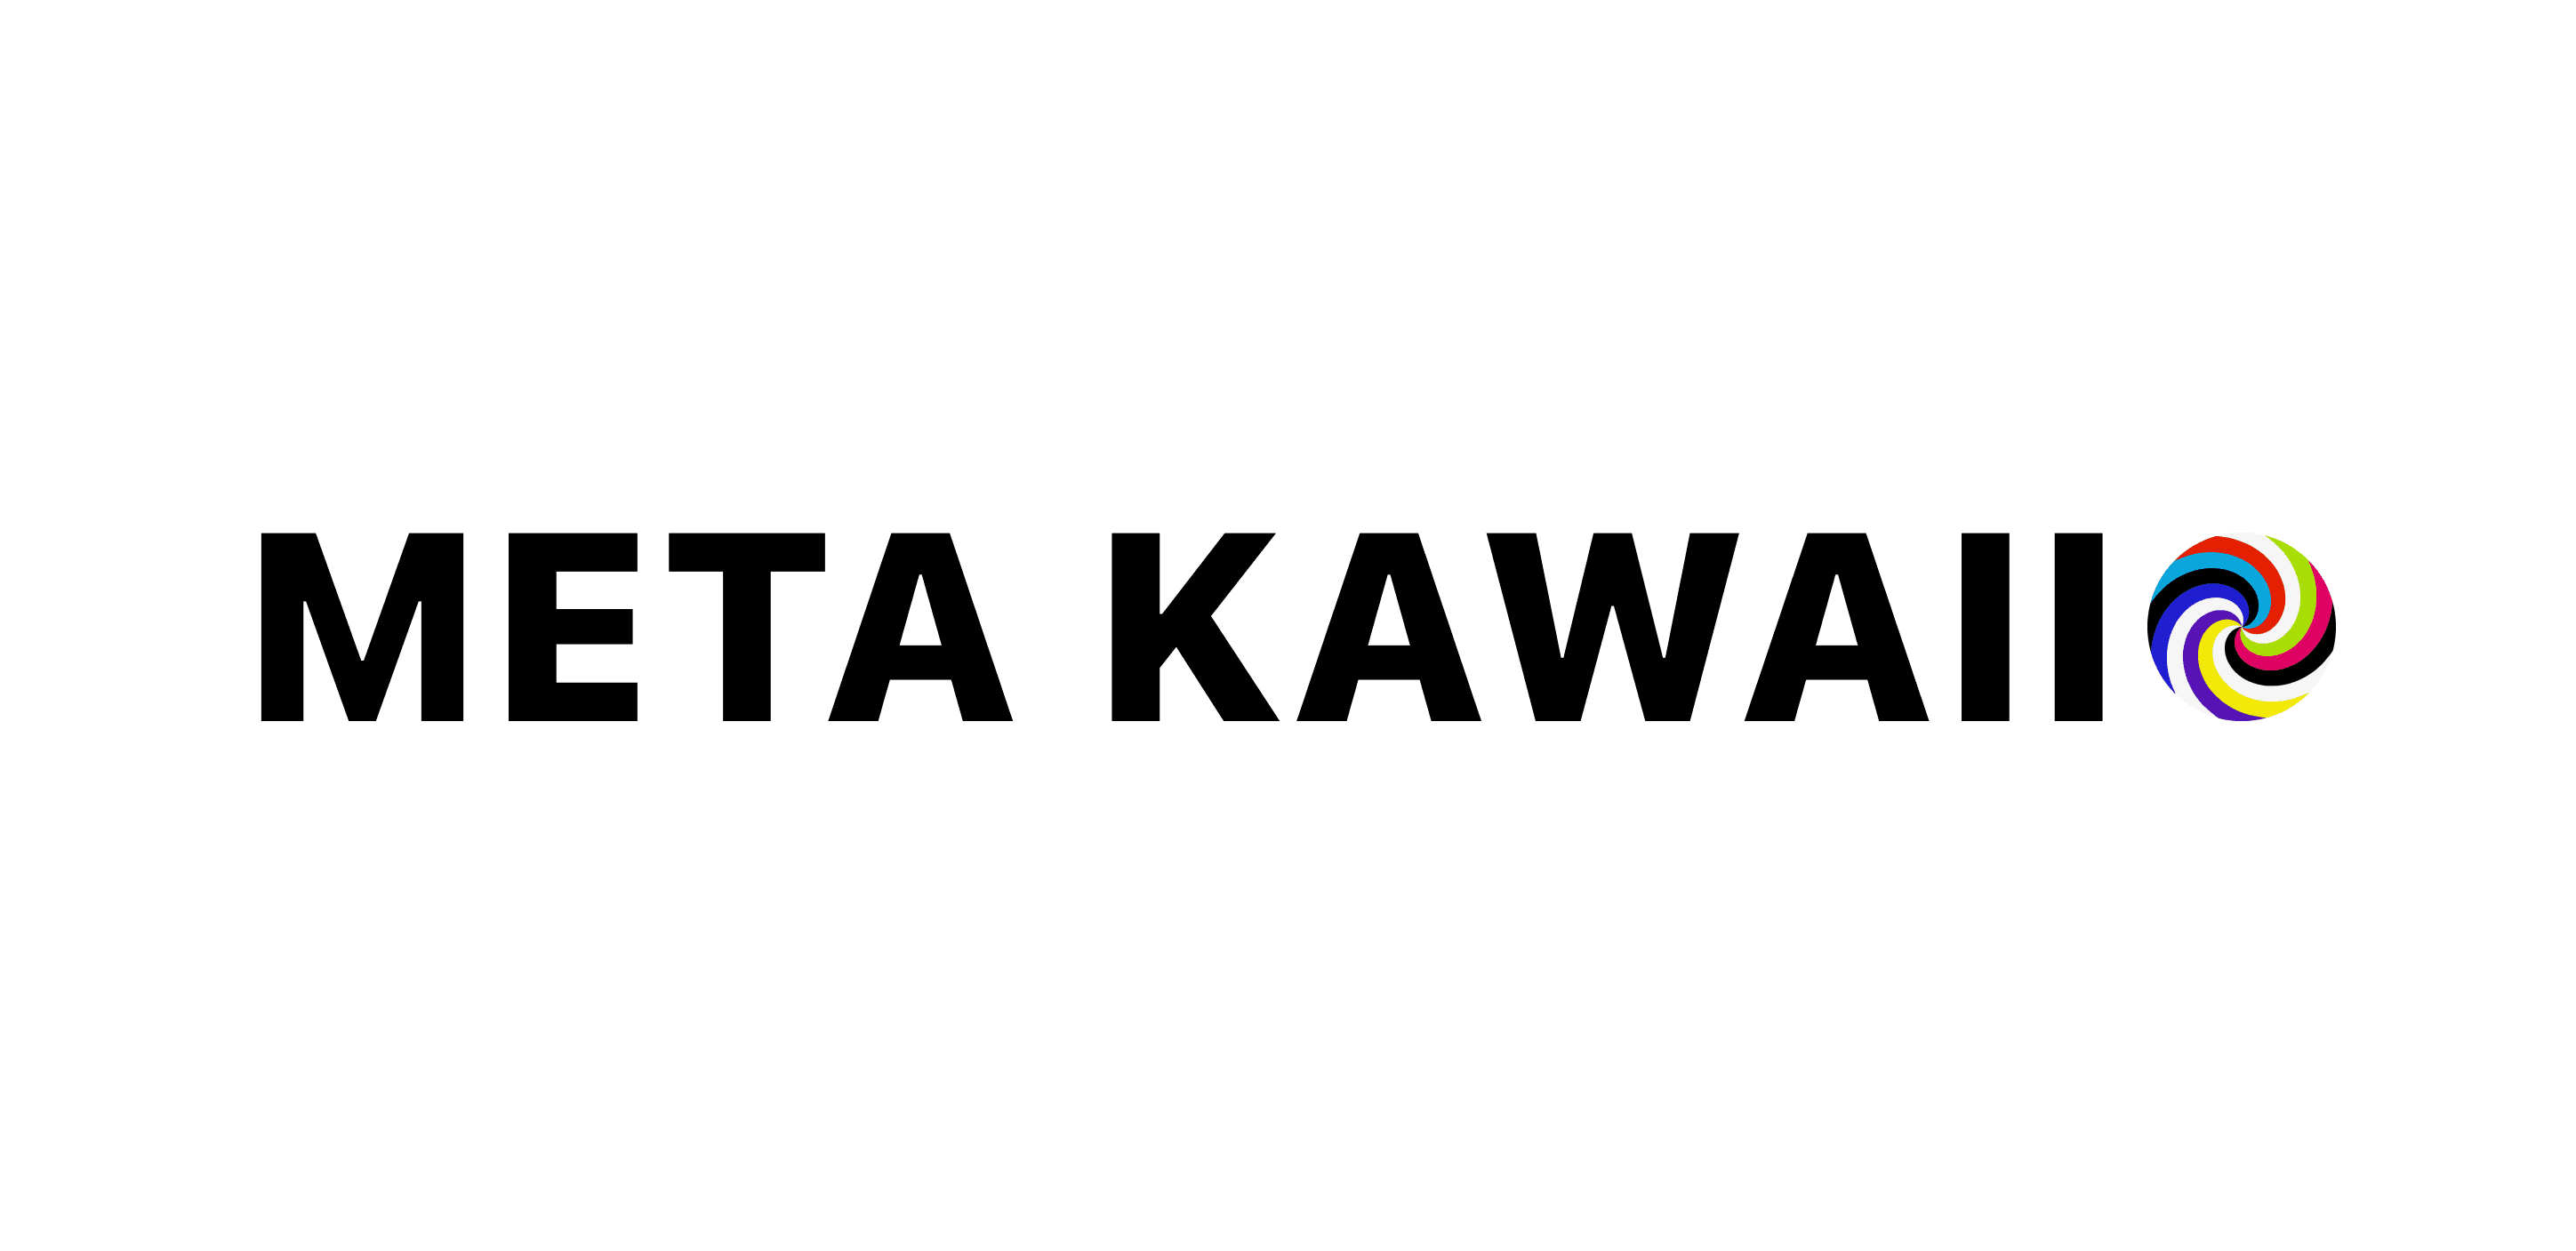 METAKAWAII banner